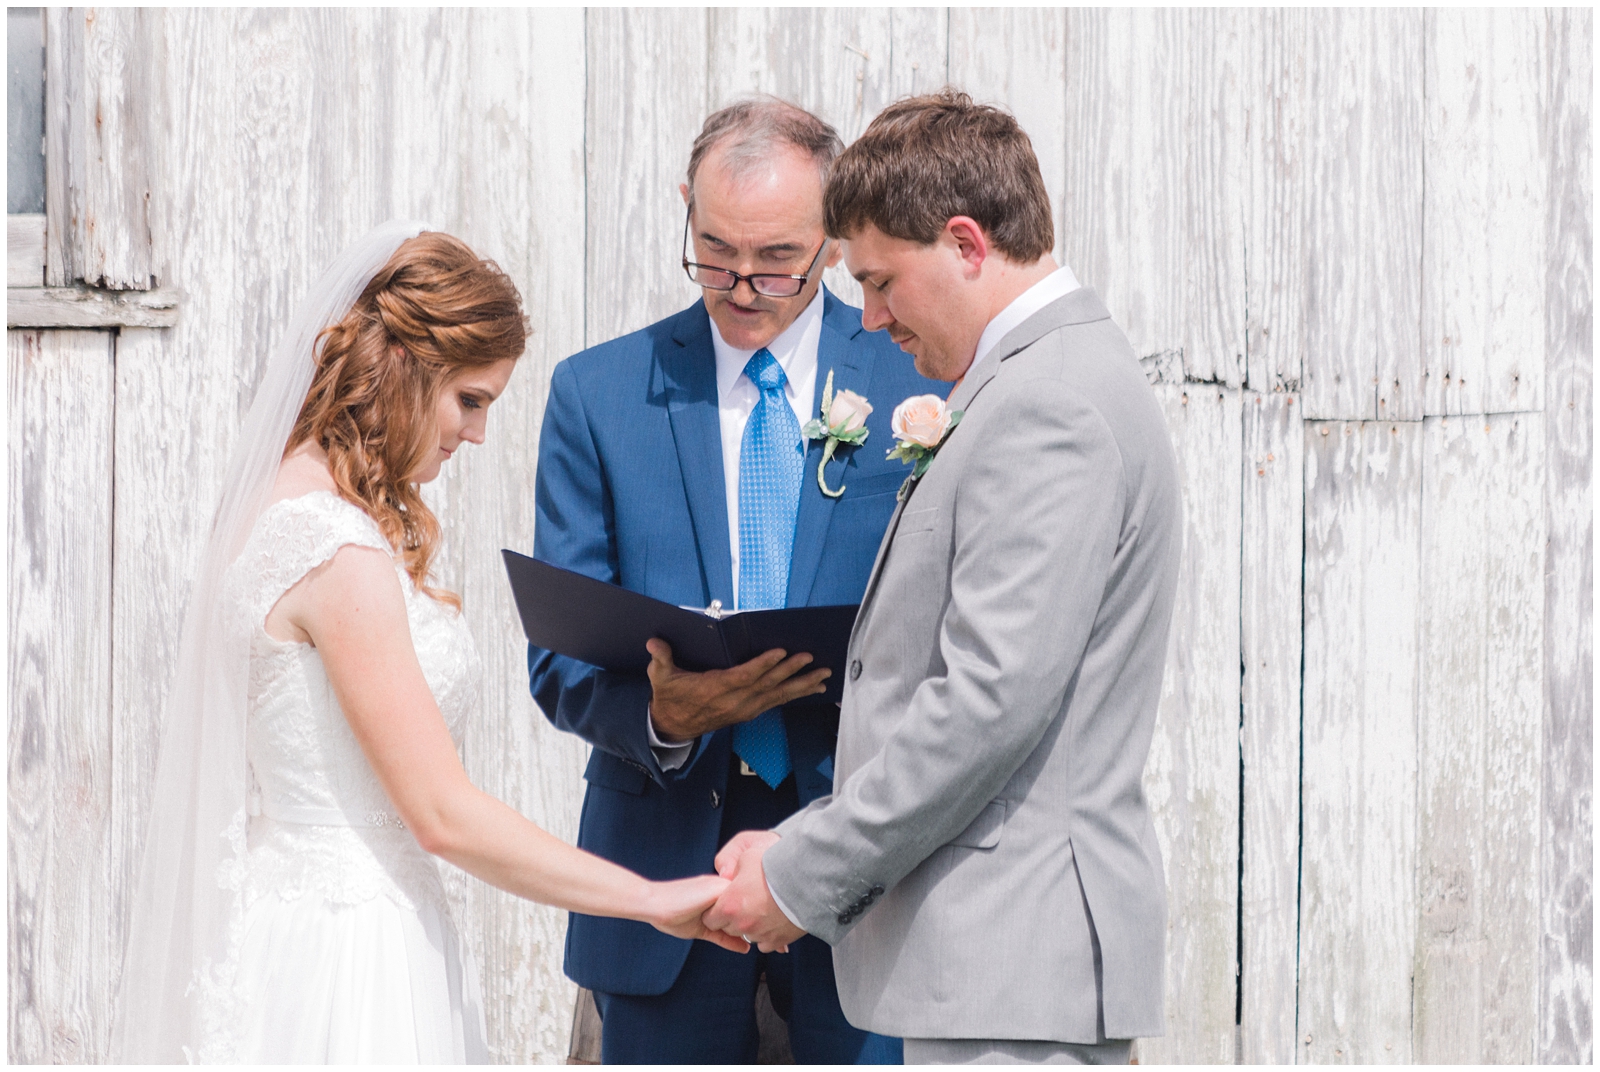 Wedding Day Timeline Tips